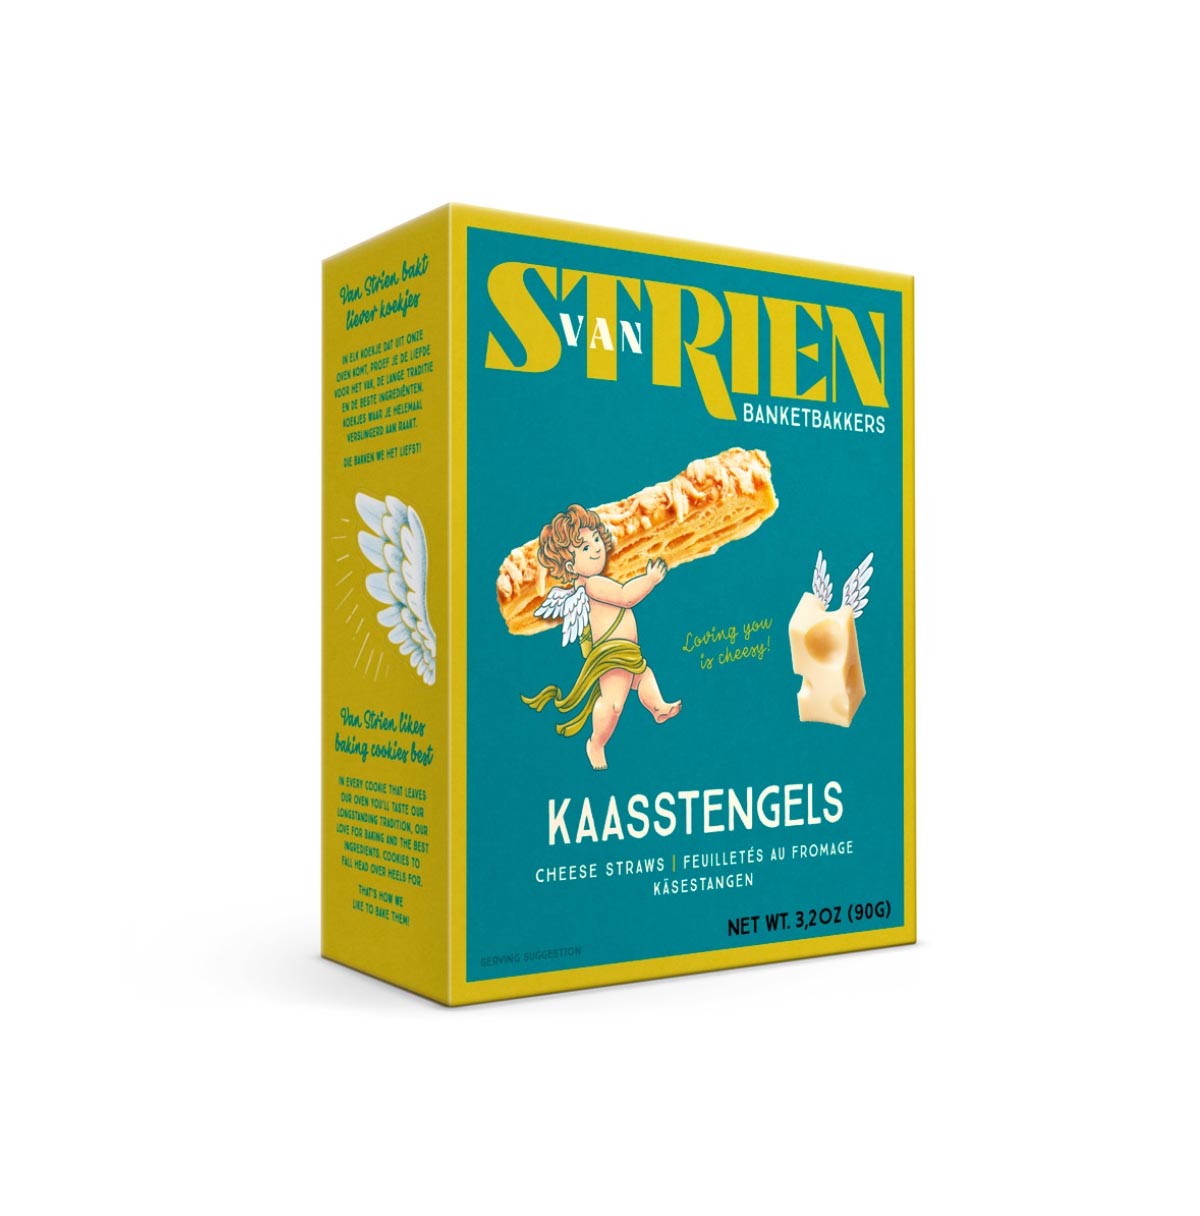 Van Strien - All-Butter Cheese Straws with Emmentaler